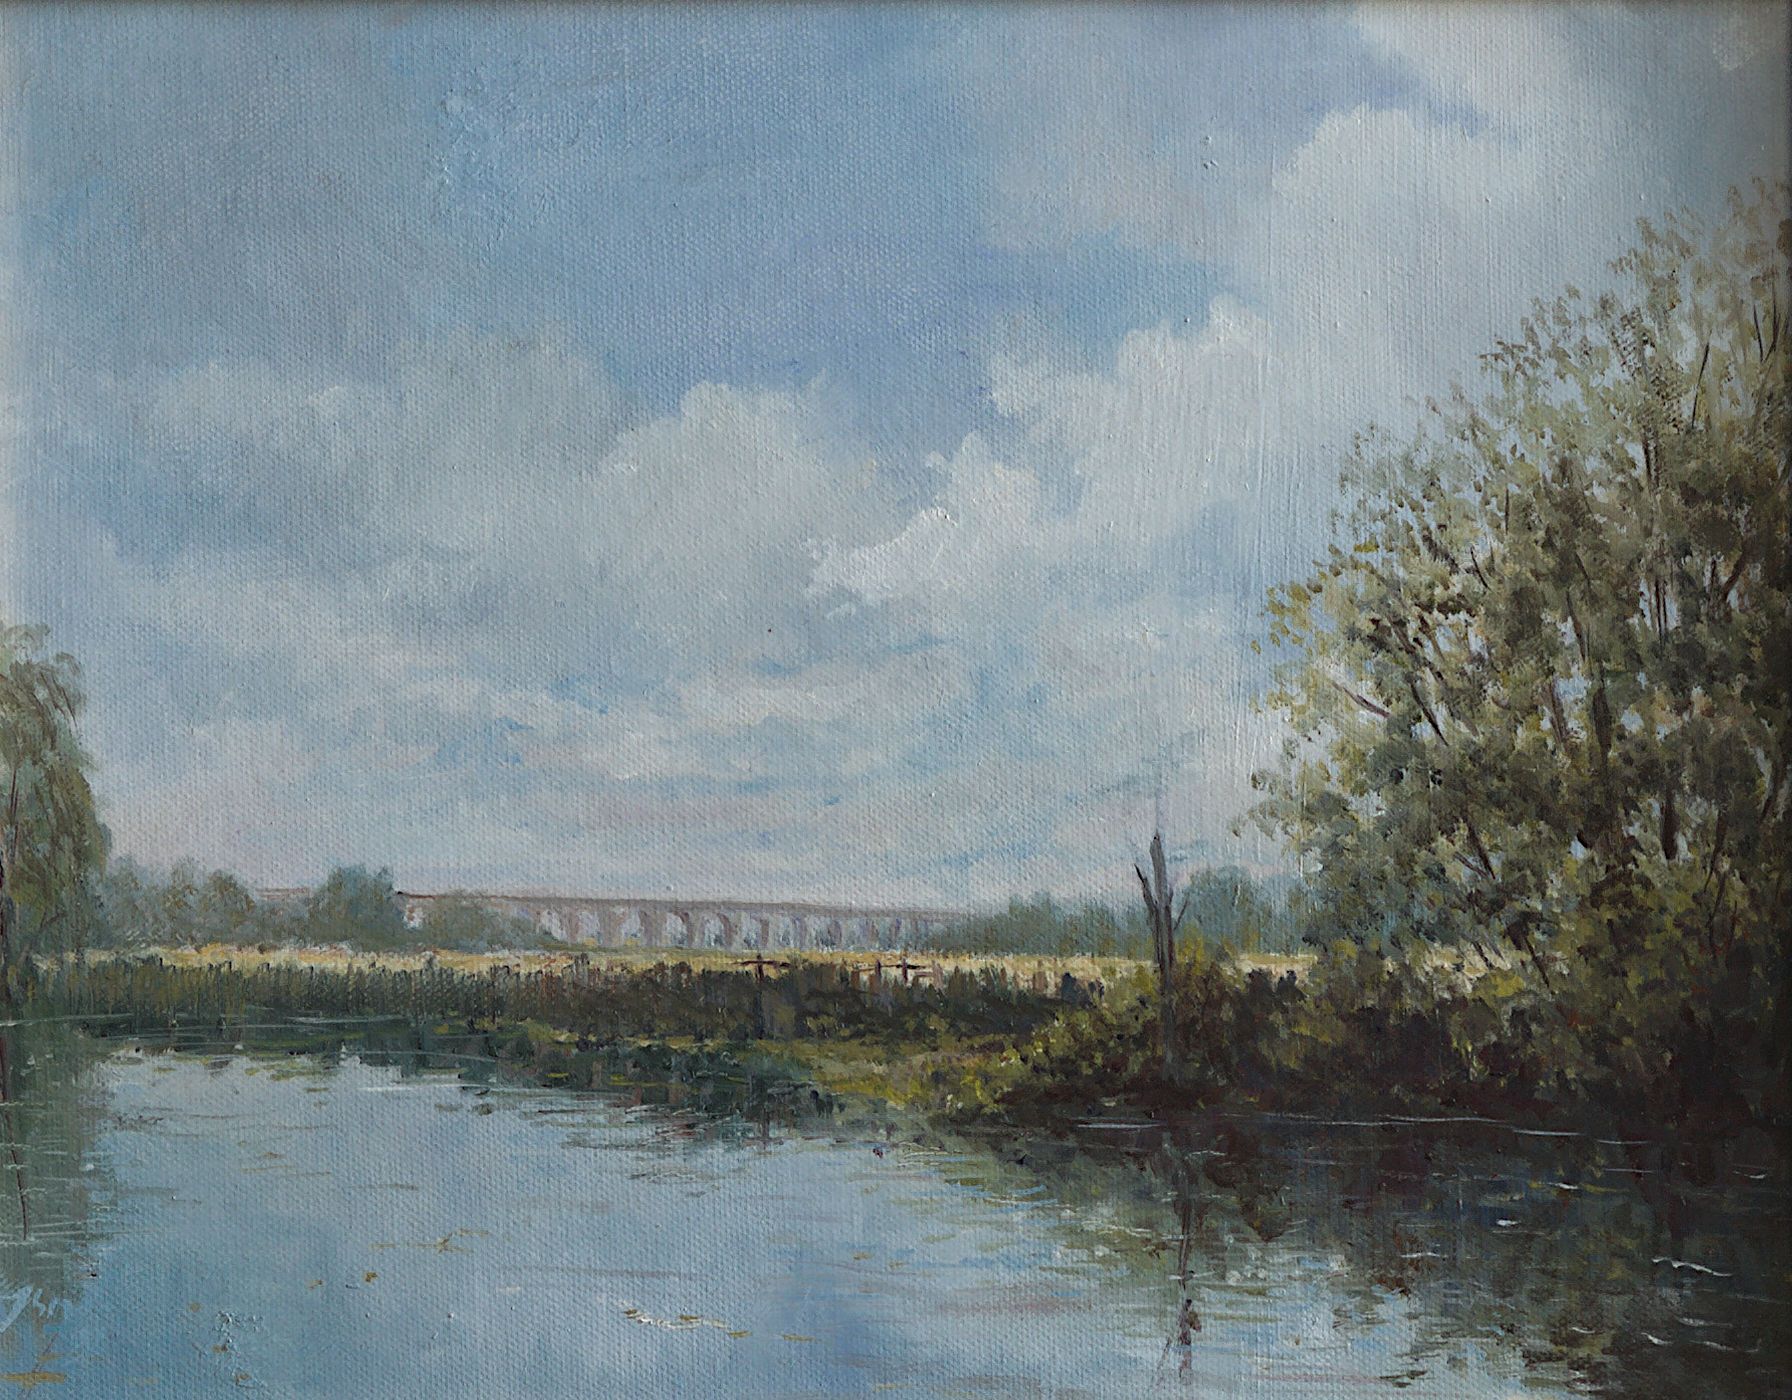 Arthington Viaduct from the Wharfe